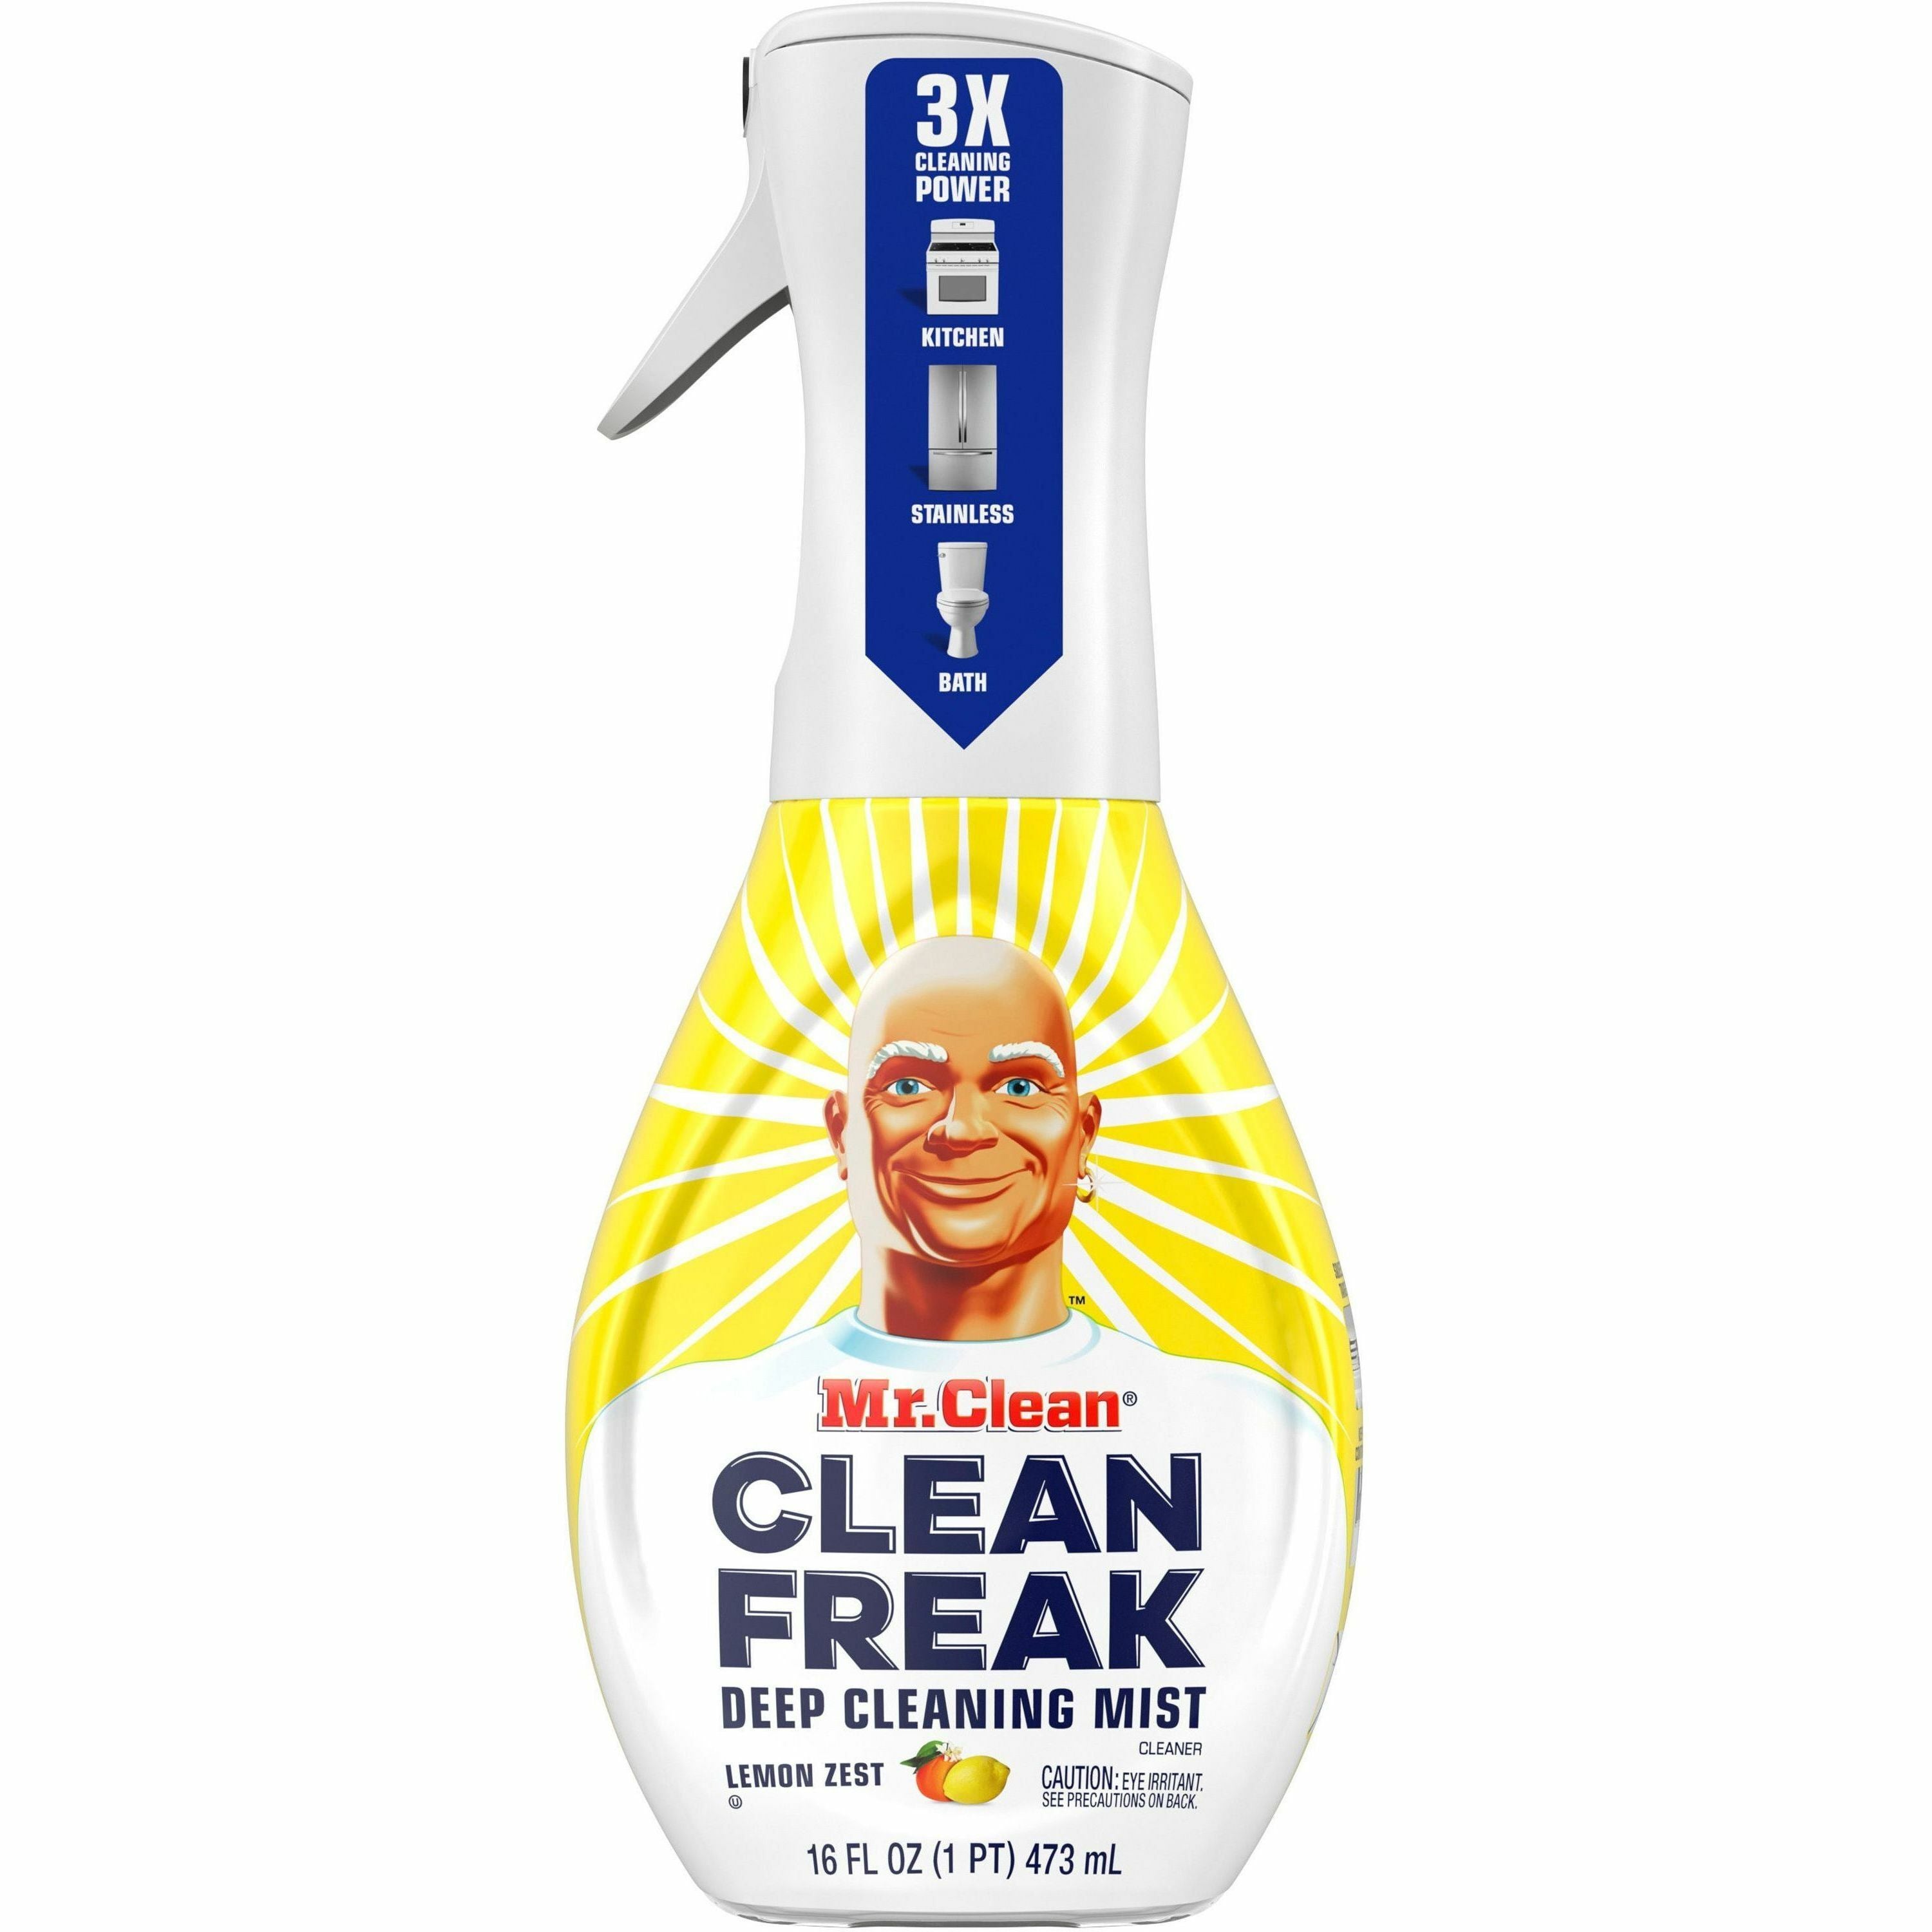 mr-clean-deep-cleaning-mist-16-fl-oz-05-quart-lemon-zest-scent-6-carton-easy-to-use-disinfectant-deodorize-phosphate-free-multi_pgc79129ct - 1